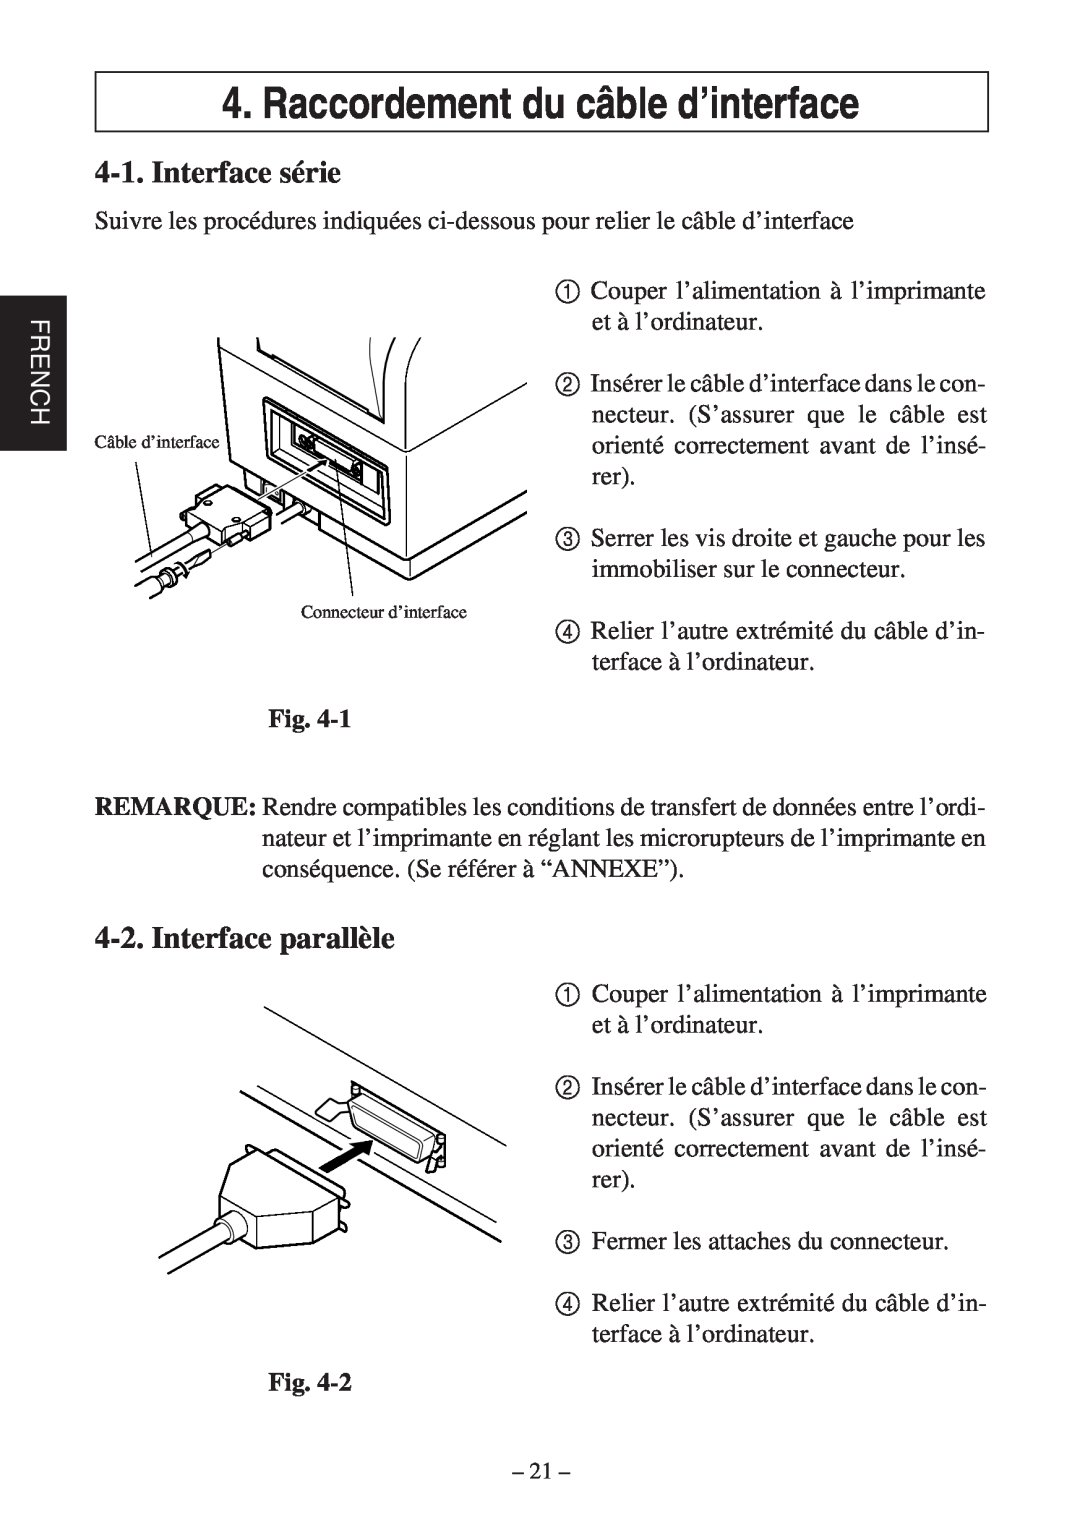 Star Micronics TSP400Z Series user manual Raccordement du câble d’interface, Interface série, Interface parallèle, French 